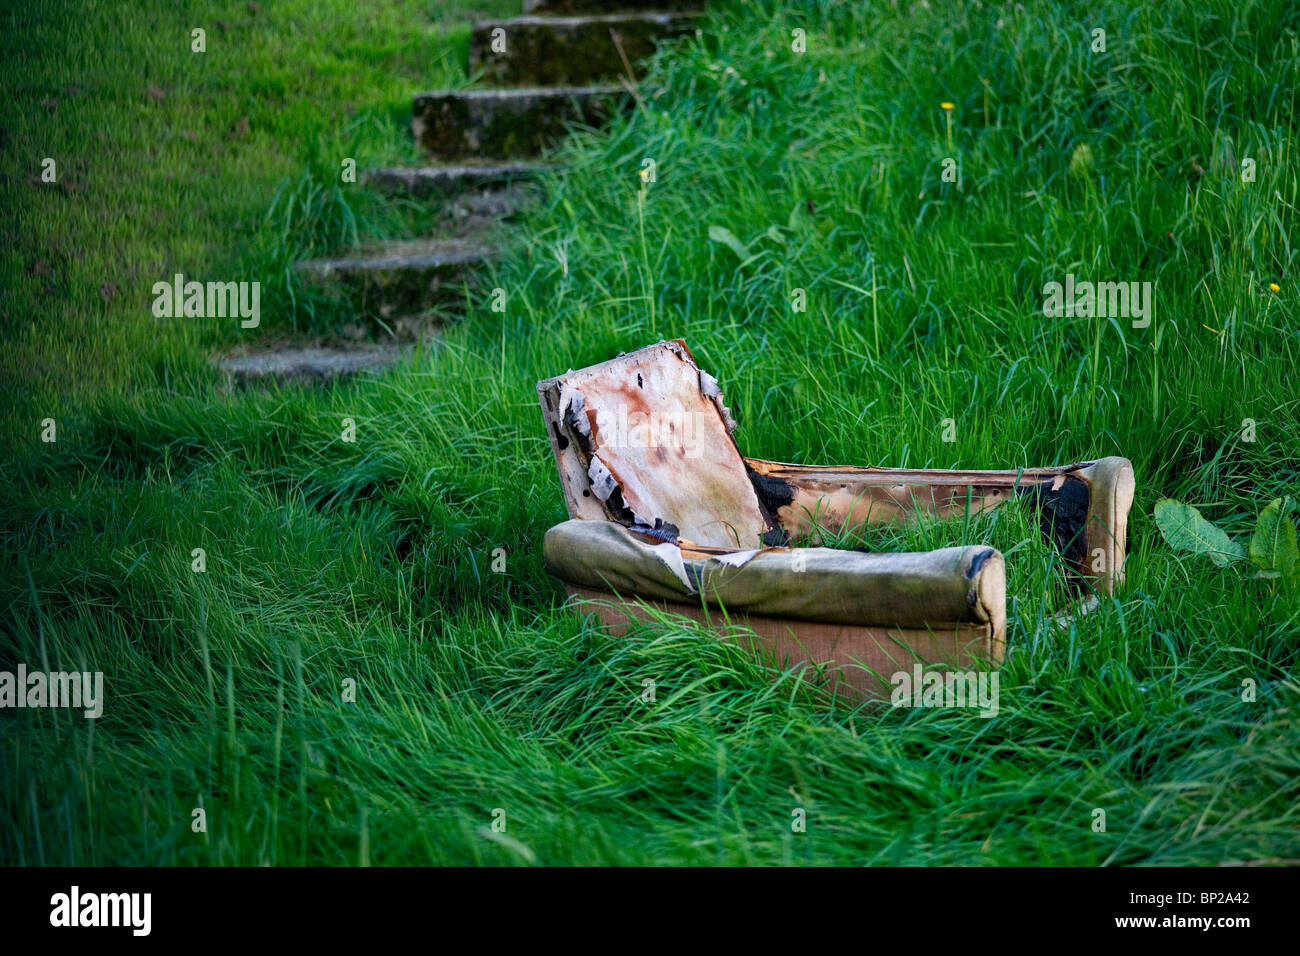 Verlassene Sofa in London Garten mit Rasen bewachsen Stockfoto